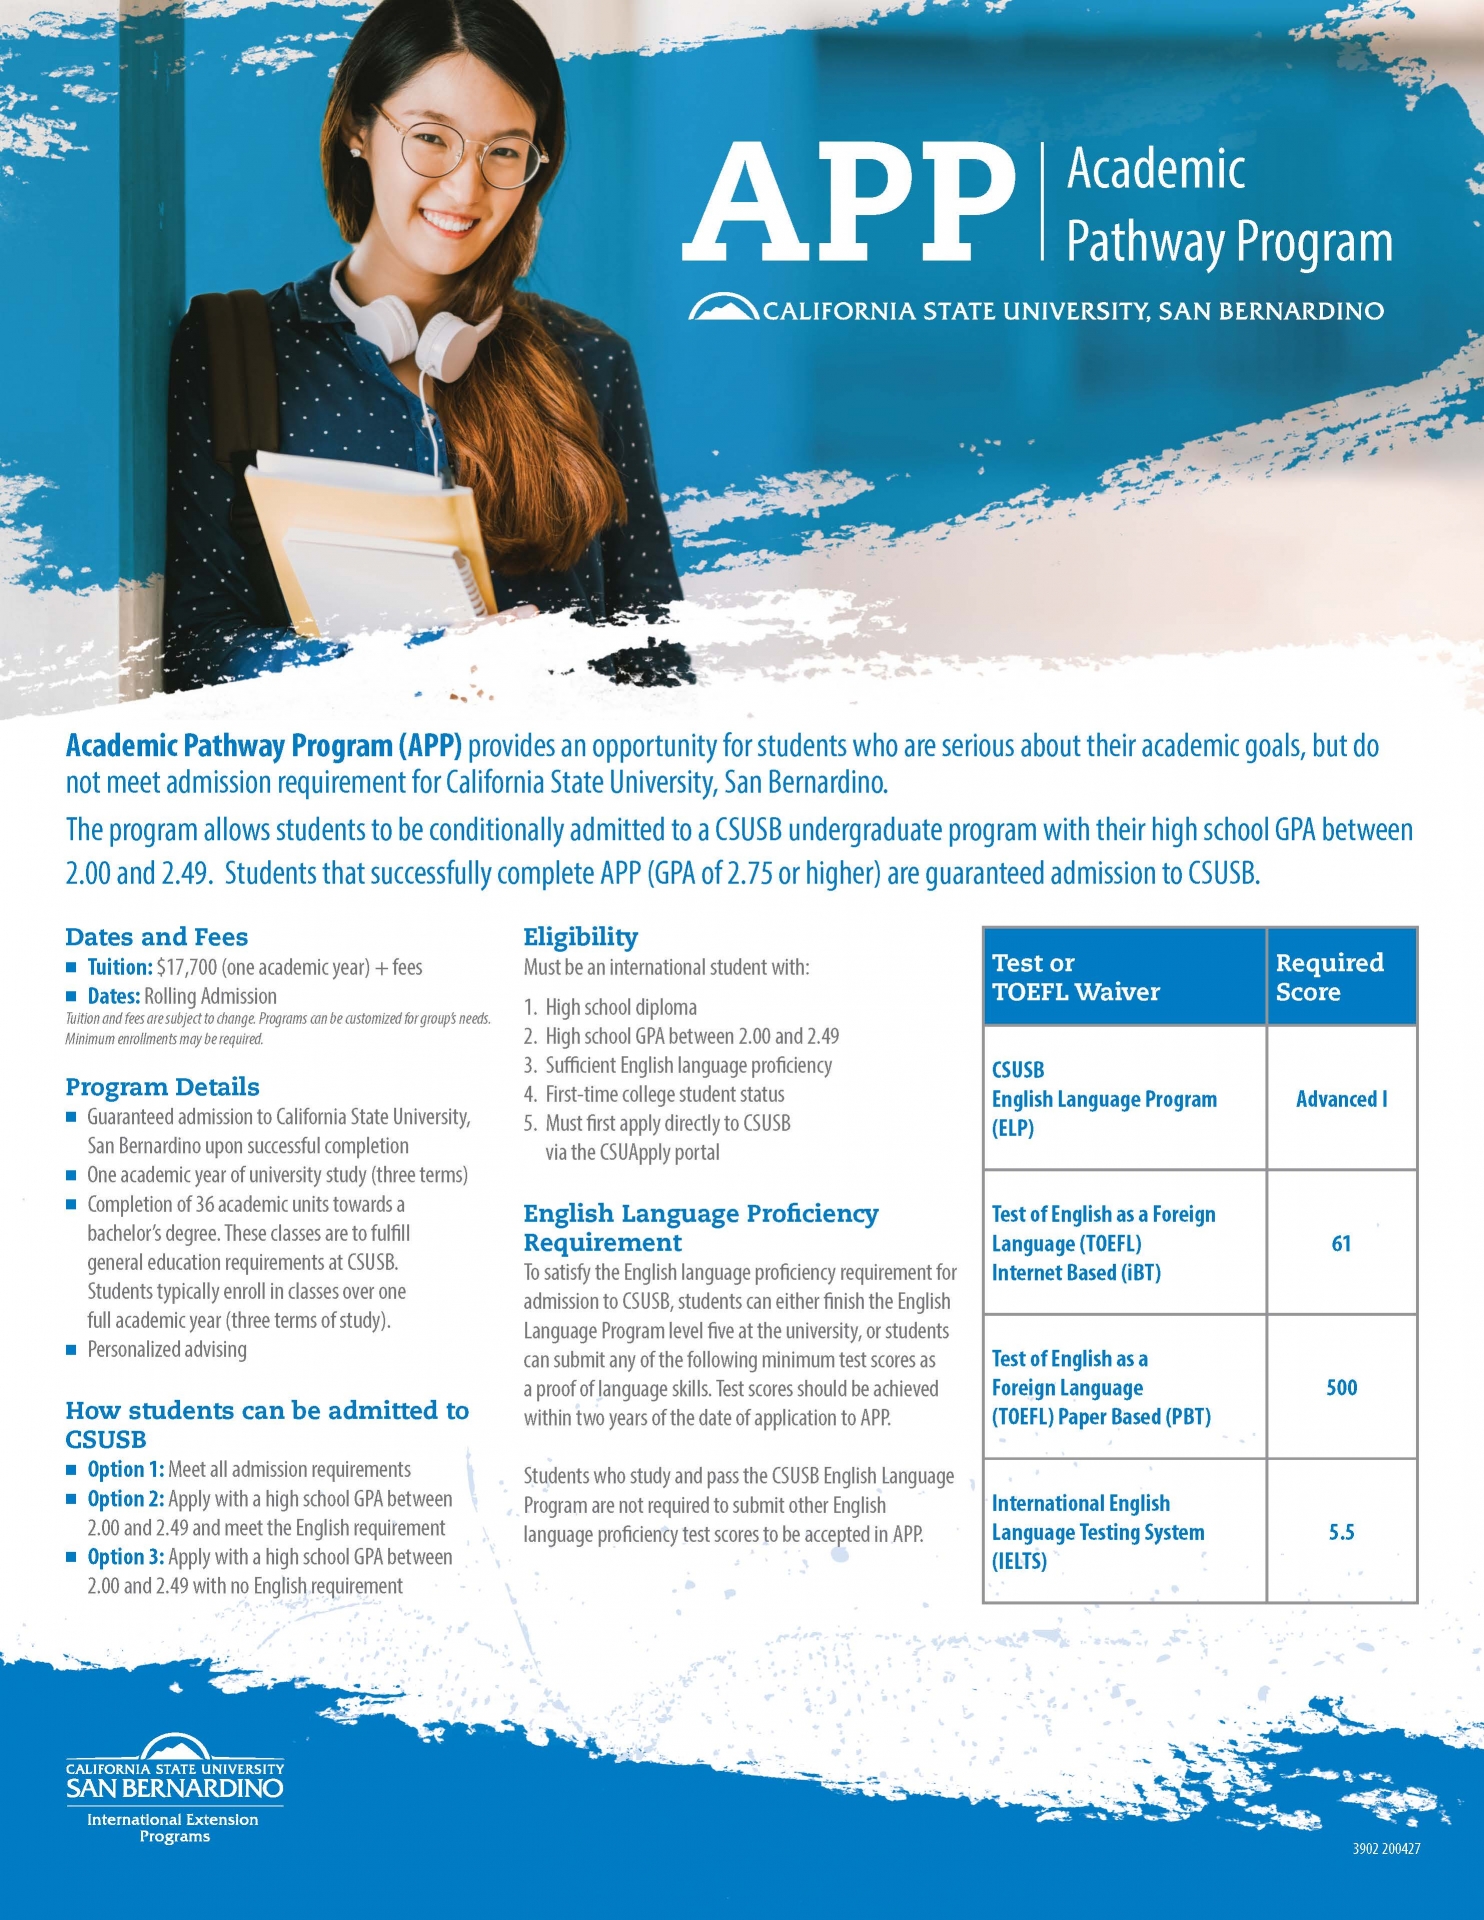 Academic Pathway Program Flyer